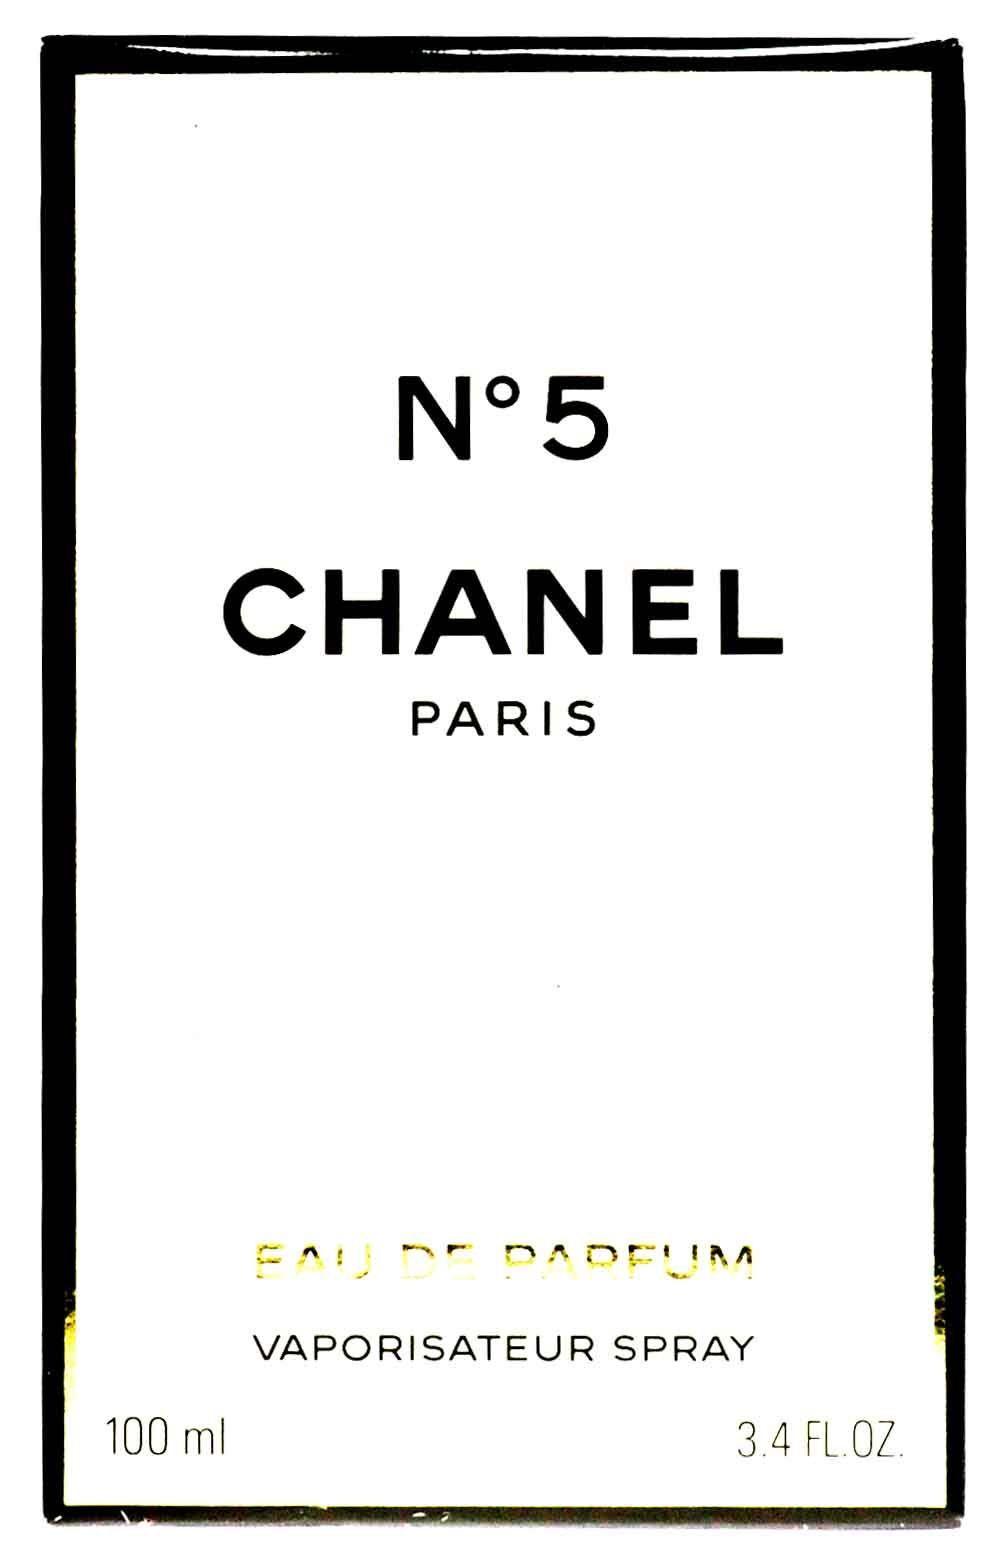 Chanel 5 Perfume Logo LogoDix